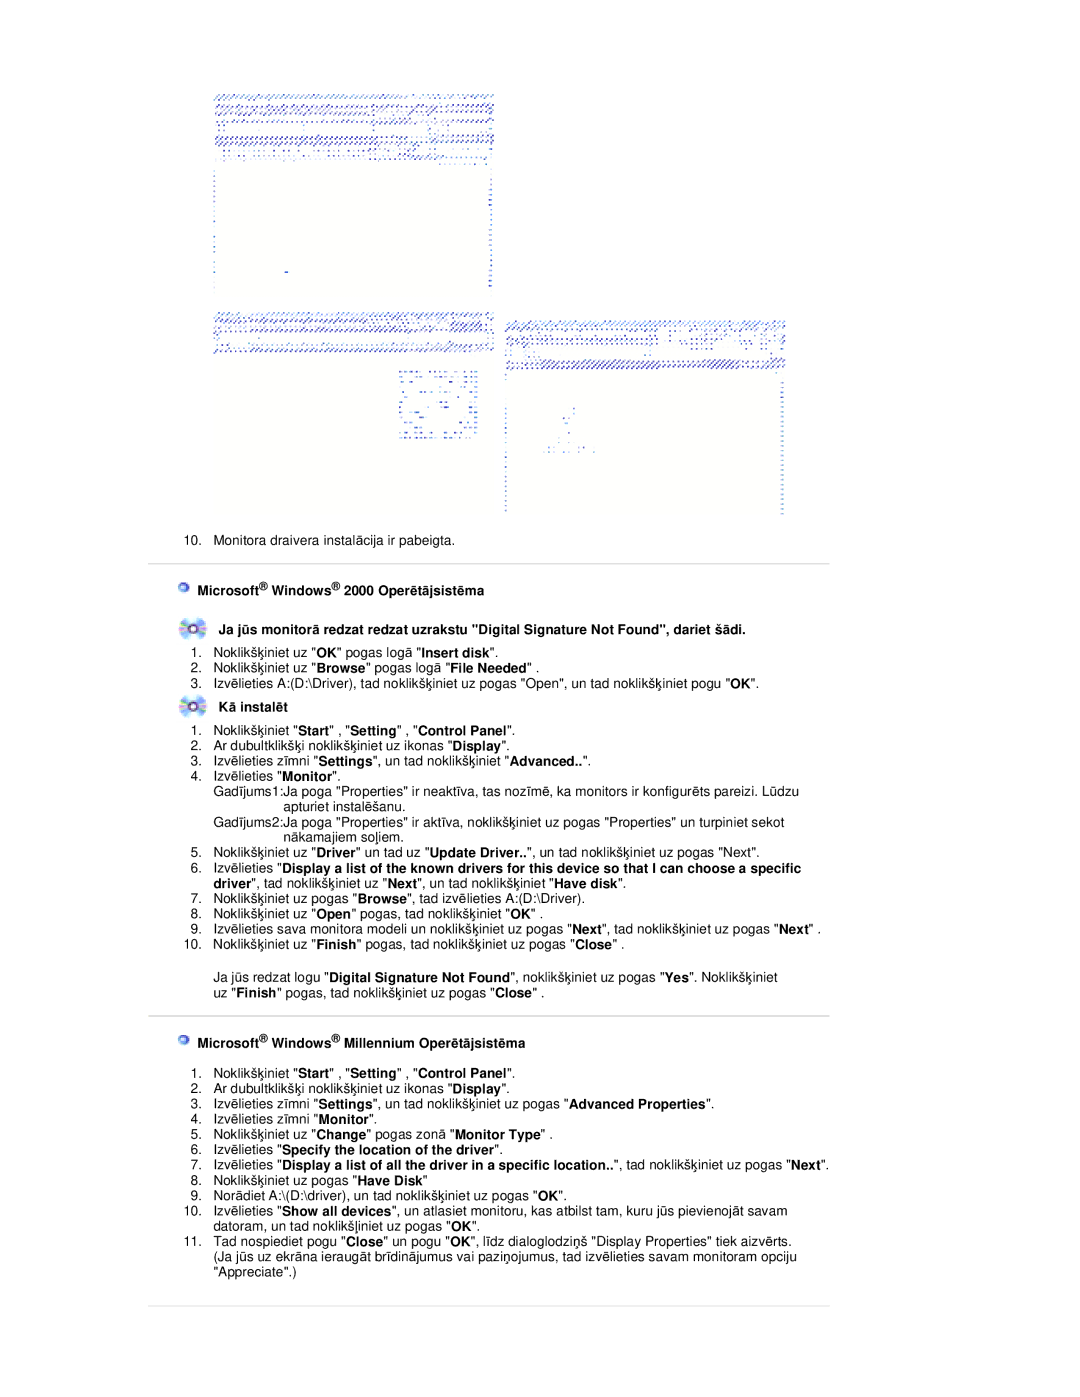 Samsung RT19FSSS/EDC manual KƗ instalƝt, Microsoft Windows Millennium OperƝtƗjsistƝma 